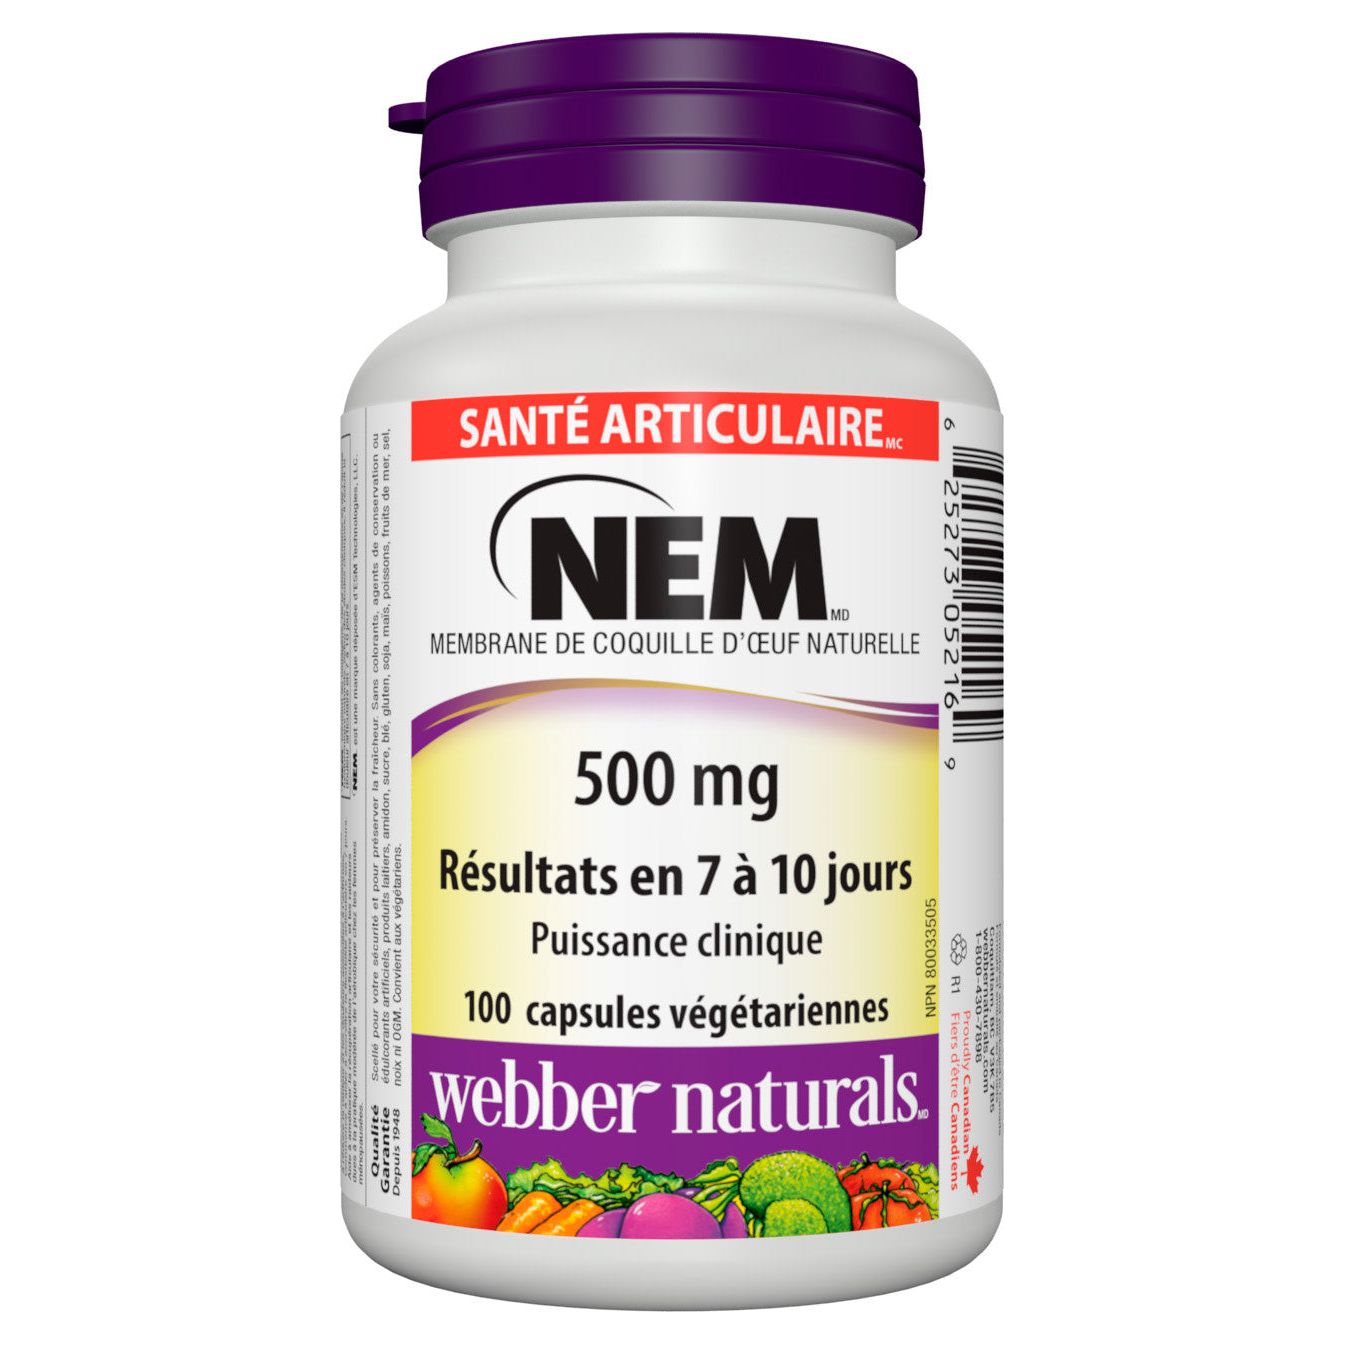 NEM 500 mg capsules végétariennes for Webber Naturals|v|hi-res|WN5216